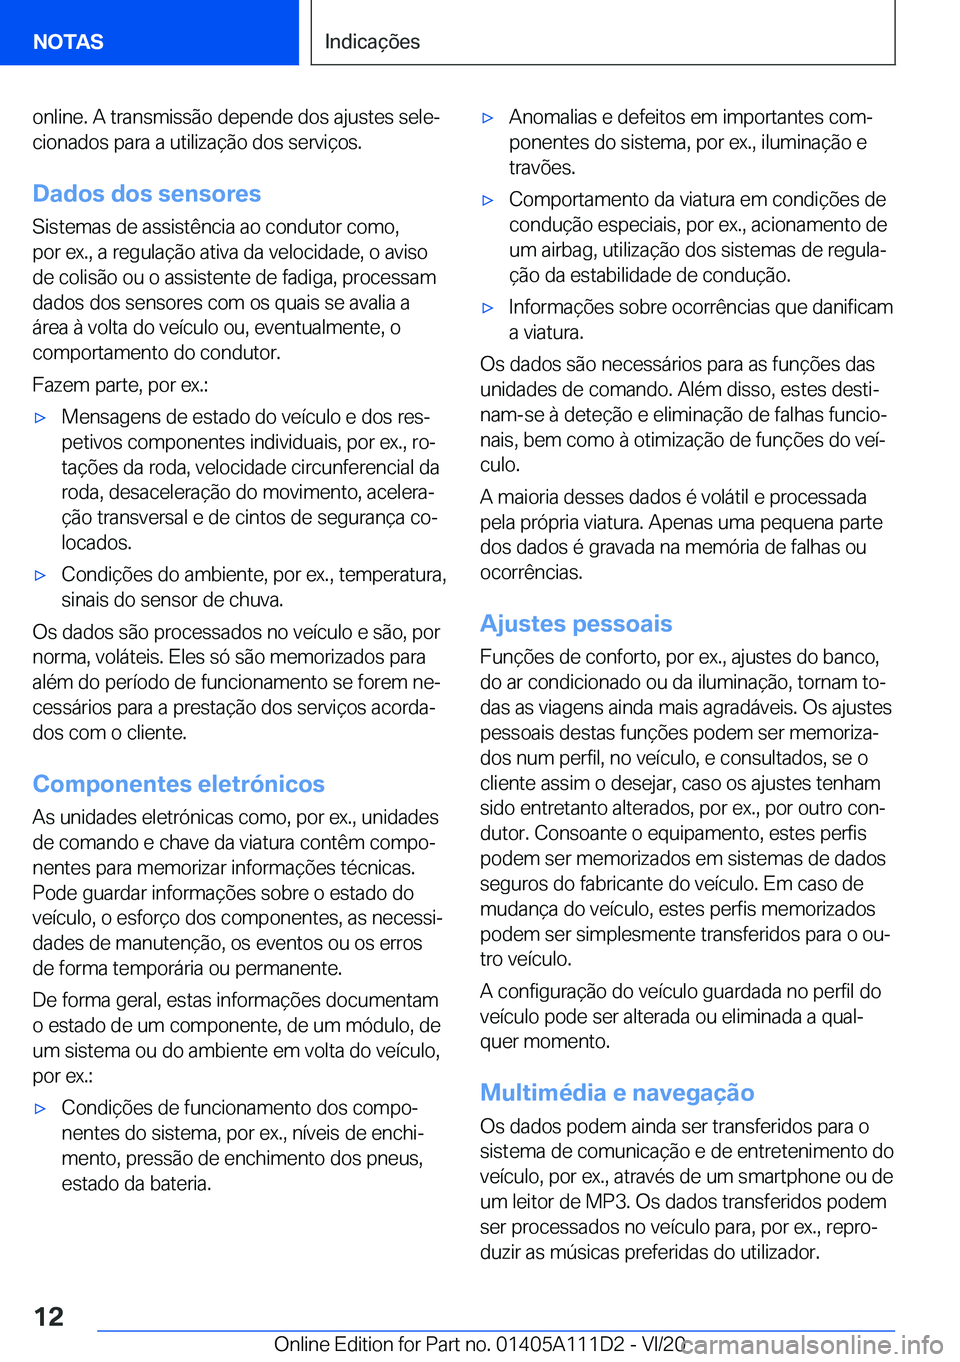 BMW 3 SERIES SEDAN PLUG-IN HYBRID 2021  Manual do condutor (in Portuguese) �o�n�l�i�n�e�.��A��t�r�a�n�s�m�i�s�s�ã�o��d�e�p�e�n�d�e��d�o�s��a�j�u�s�t�e�s��s�e�l�eª�c�i�o�n�a�d�o�s��p�a�r�a��a��u�t�i�l�i�z�a�